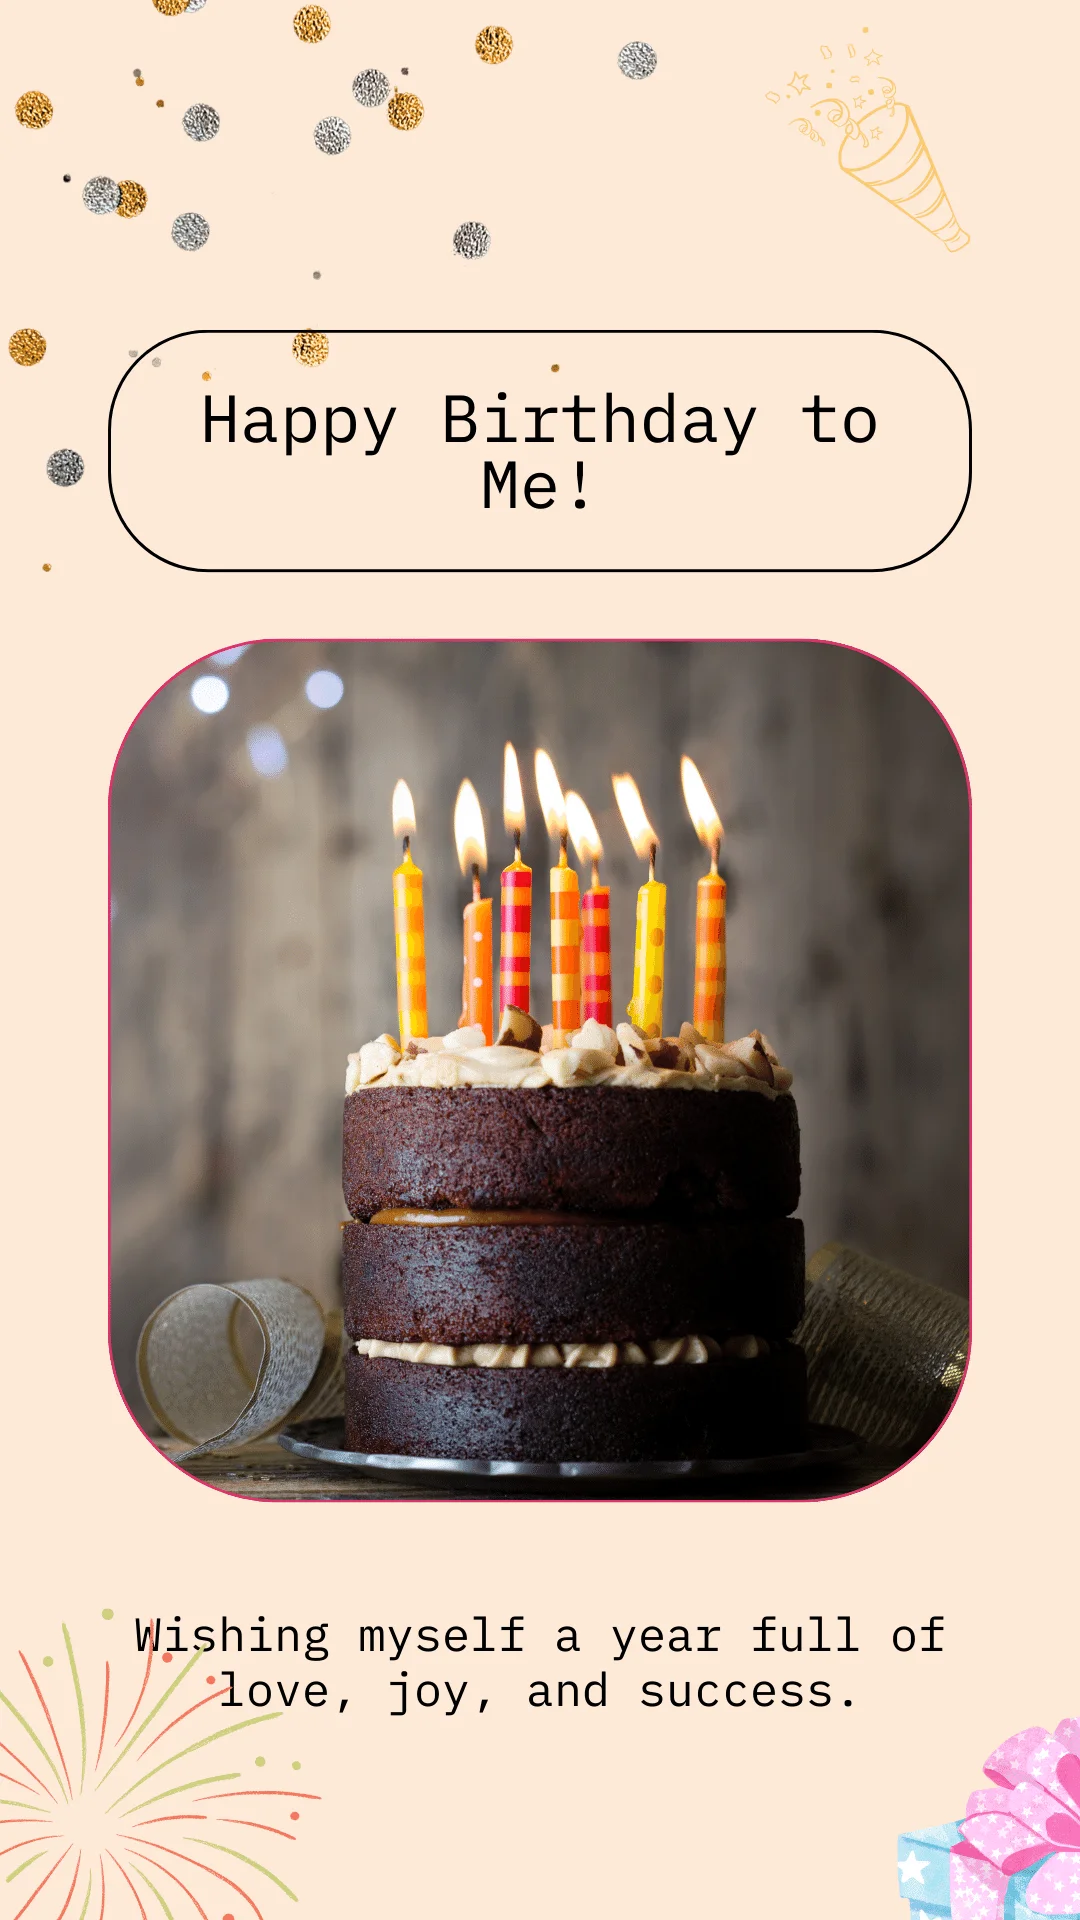 Celebrating-Self-Growth-Birthday-Wishes